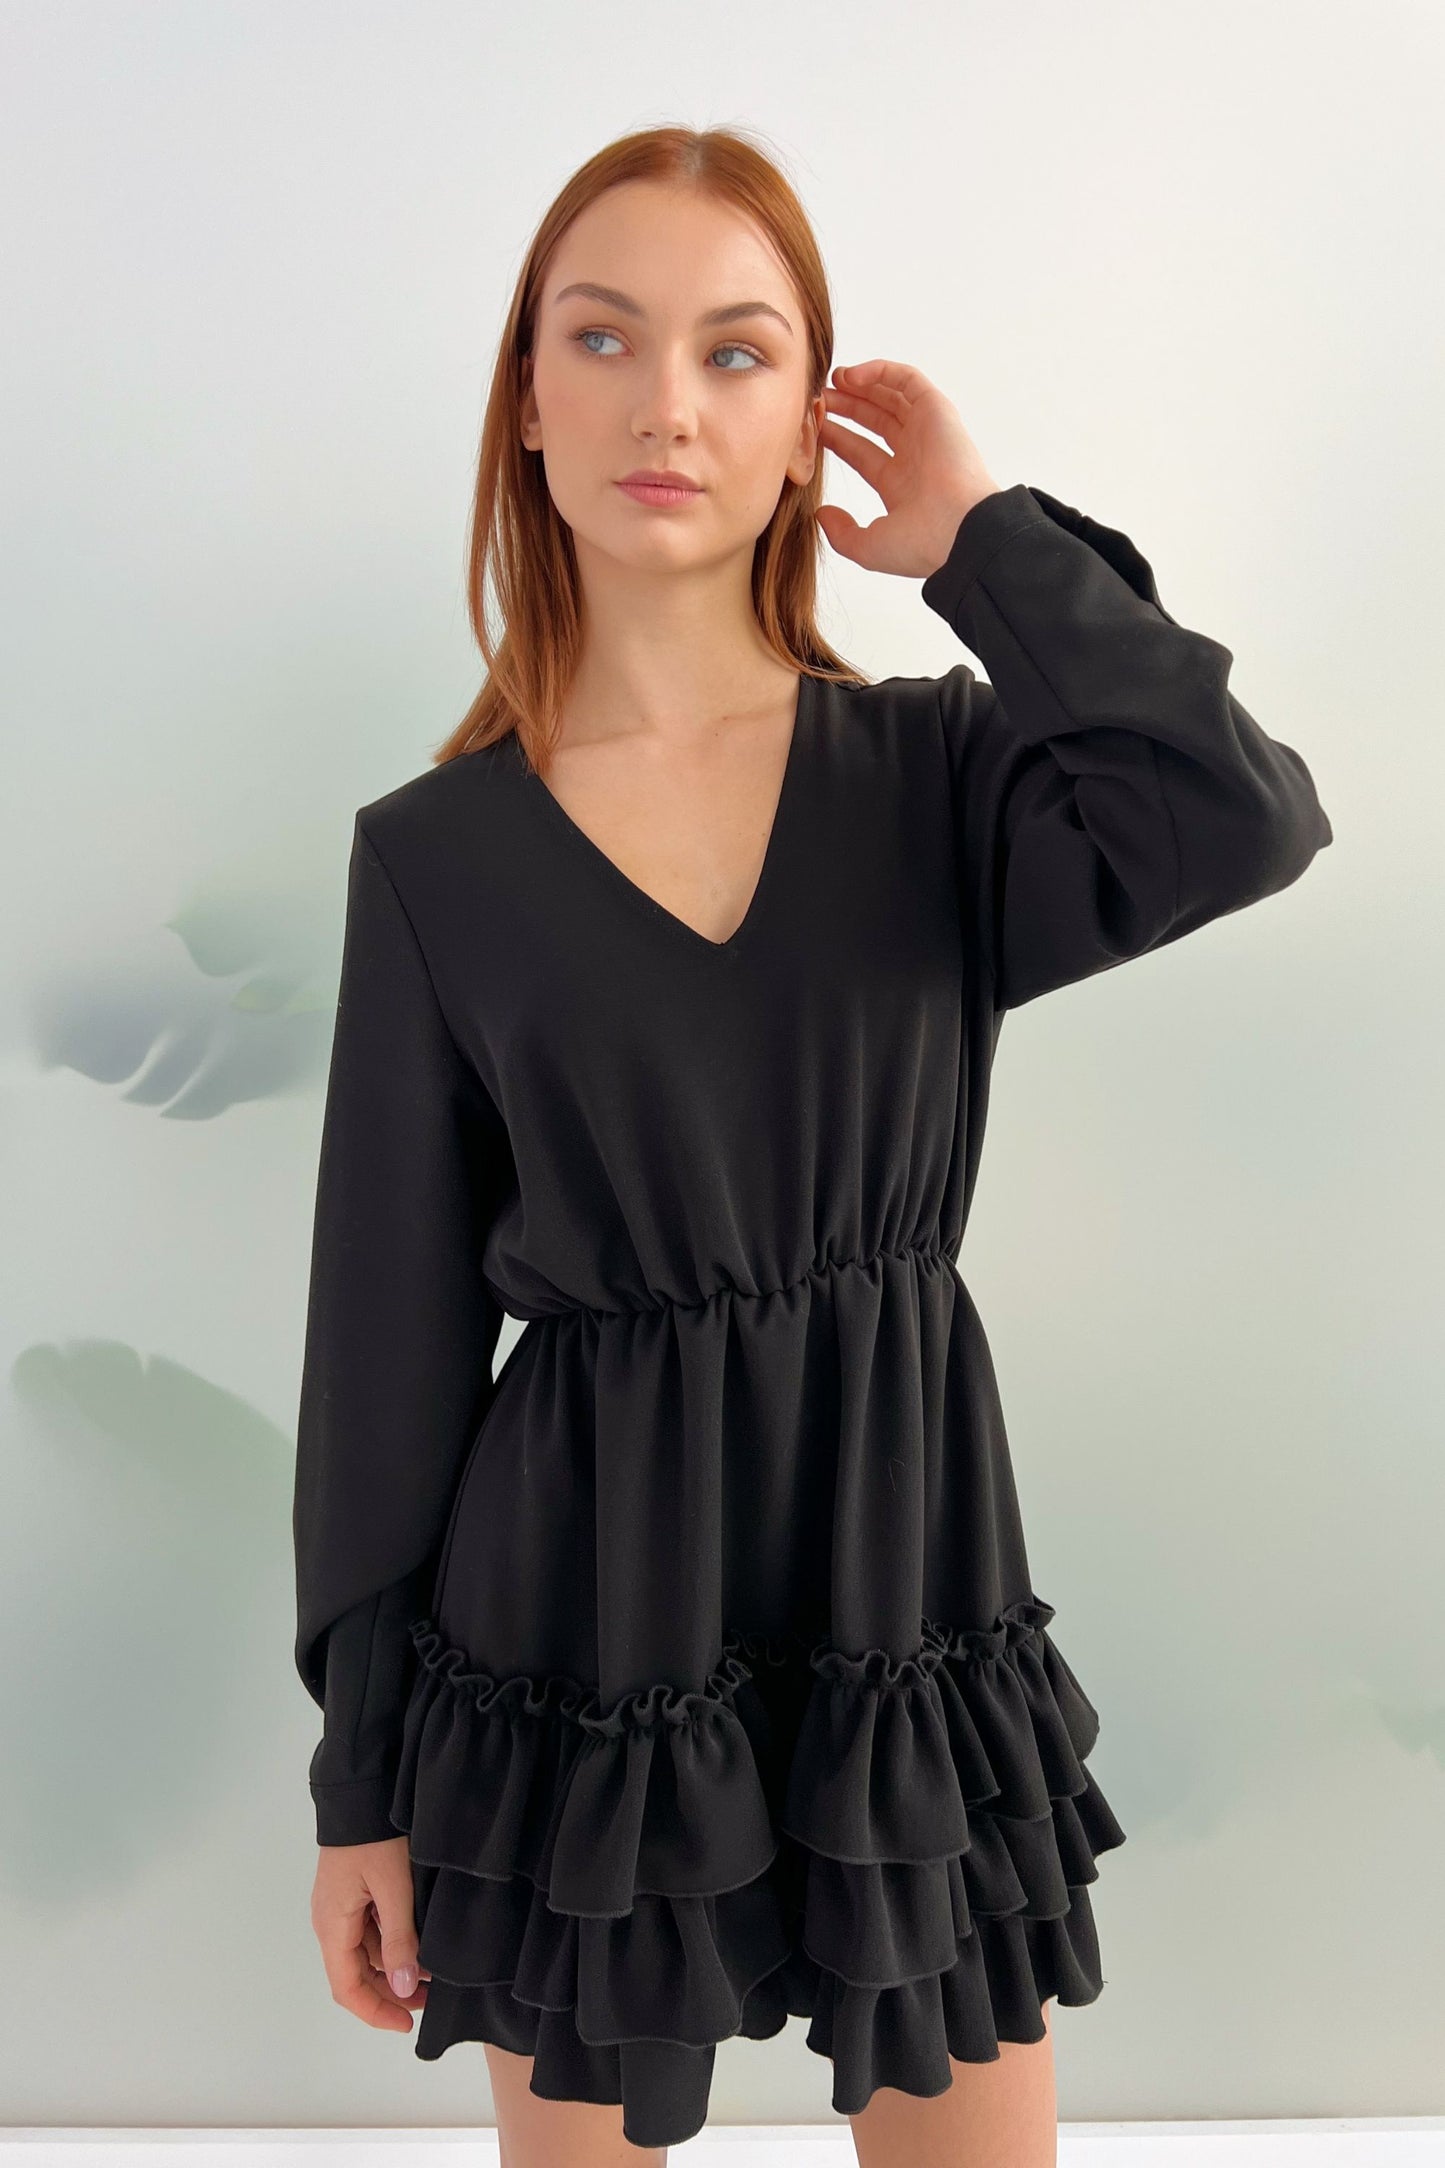 Black autumn dress with ruffles